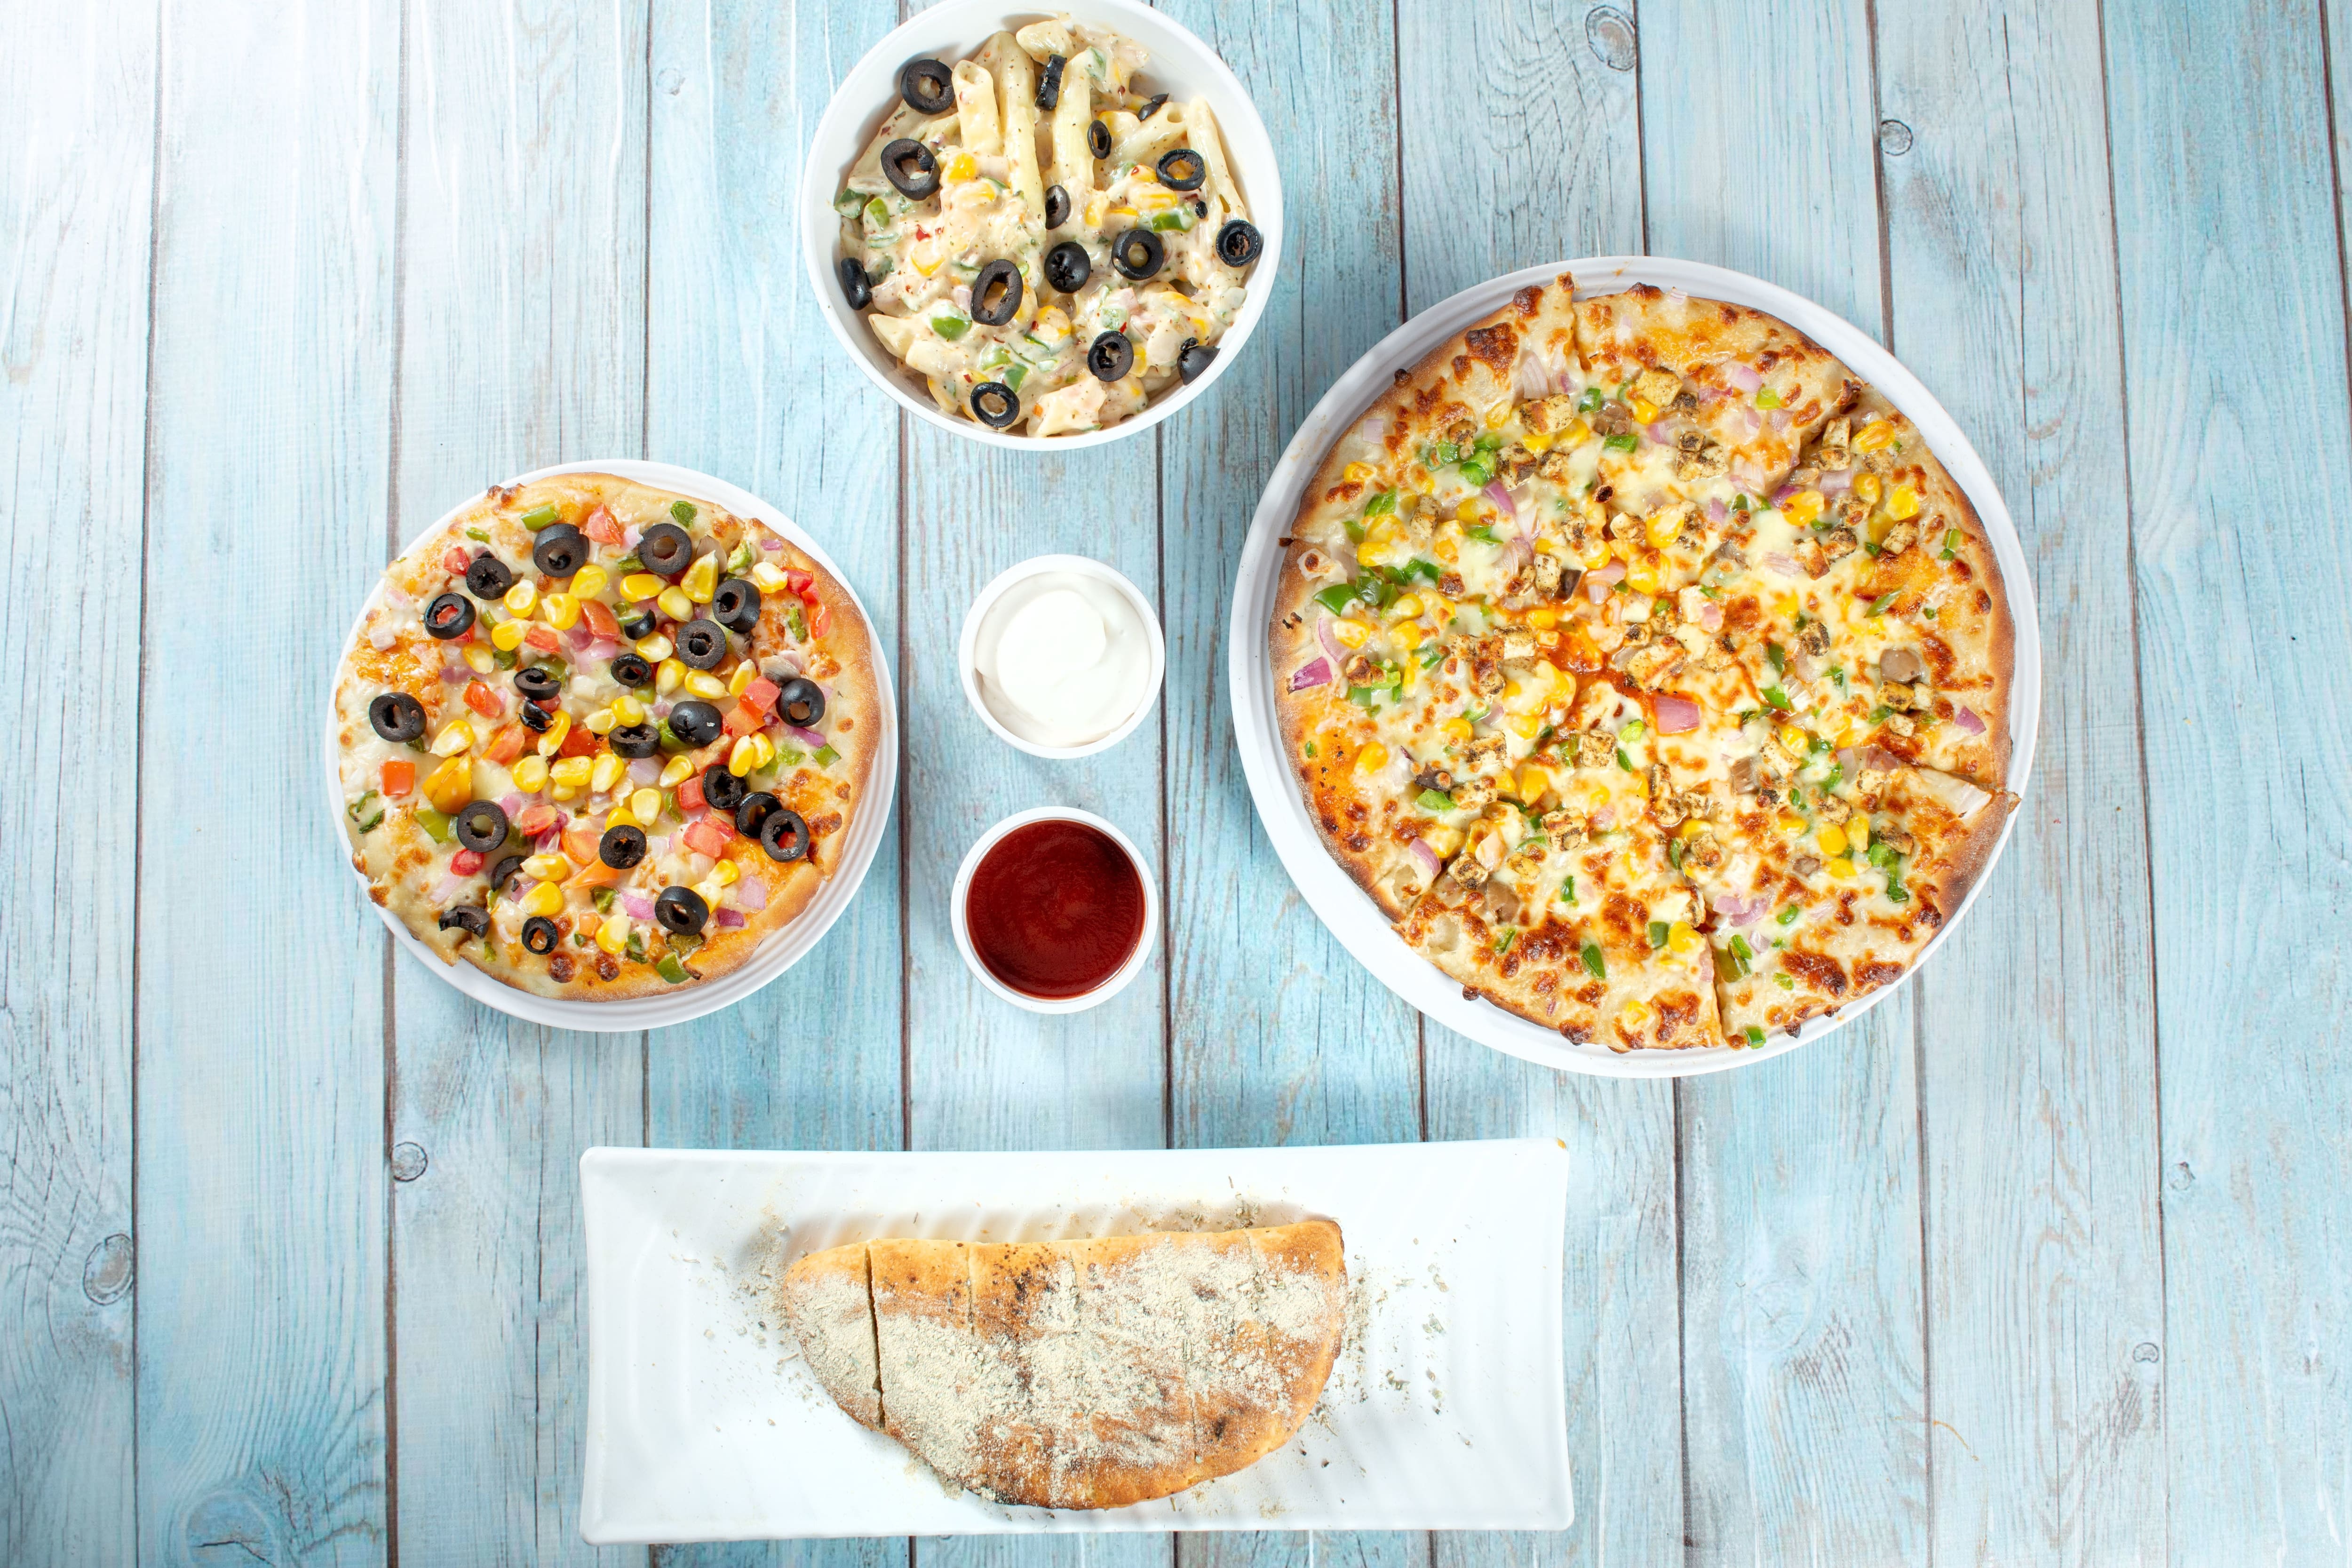 Roms Pizza in Civil Lines,Muzaffarnagar - Best Pizza Outlets in